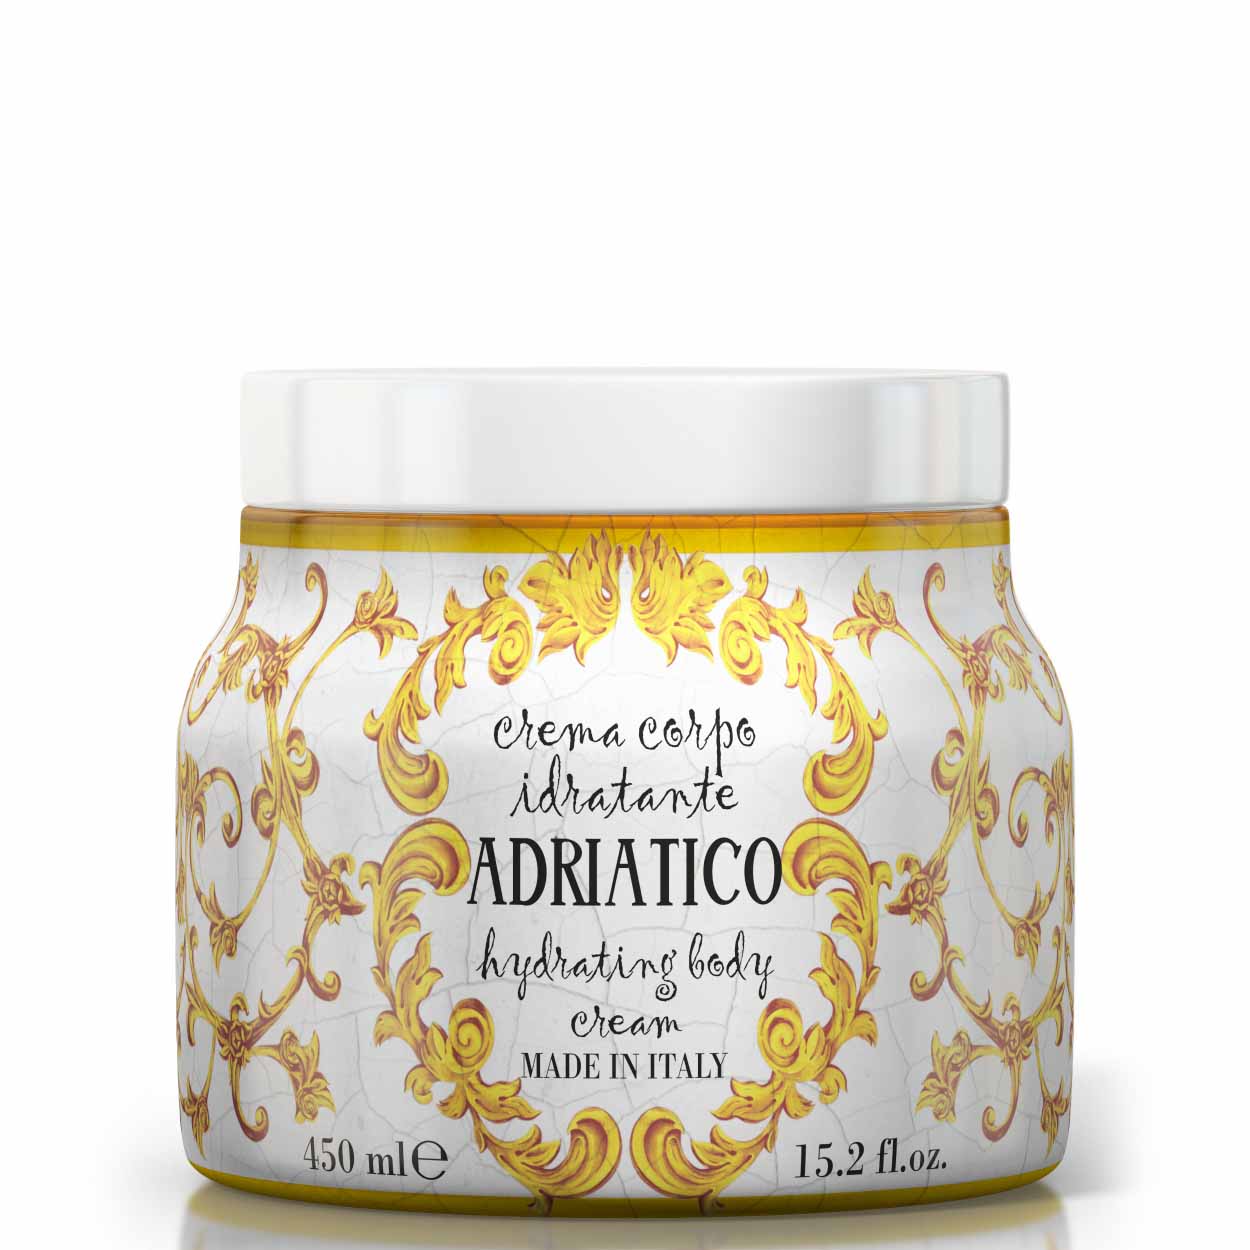 <p><b>Moisturizing Body Cream 450 mL</b><br />
jarmine and amber<br />
<i>Adriatico range</i></p>
